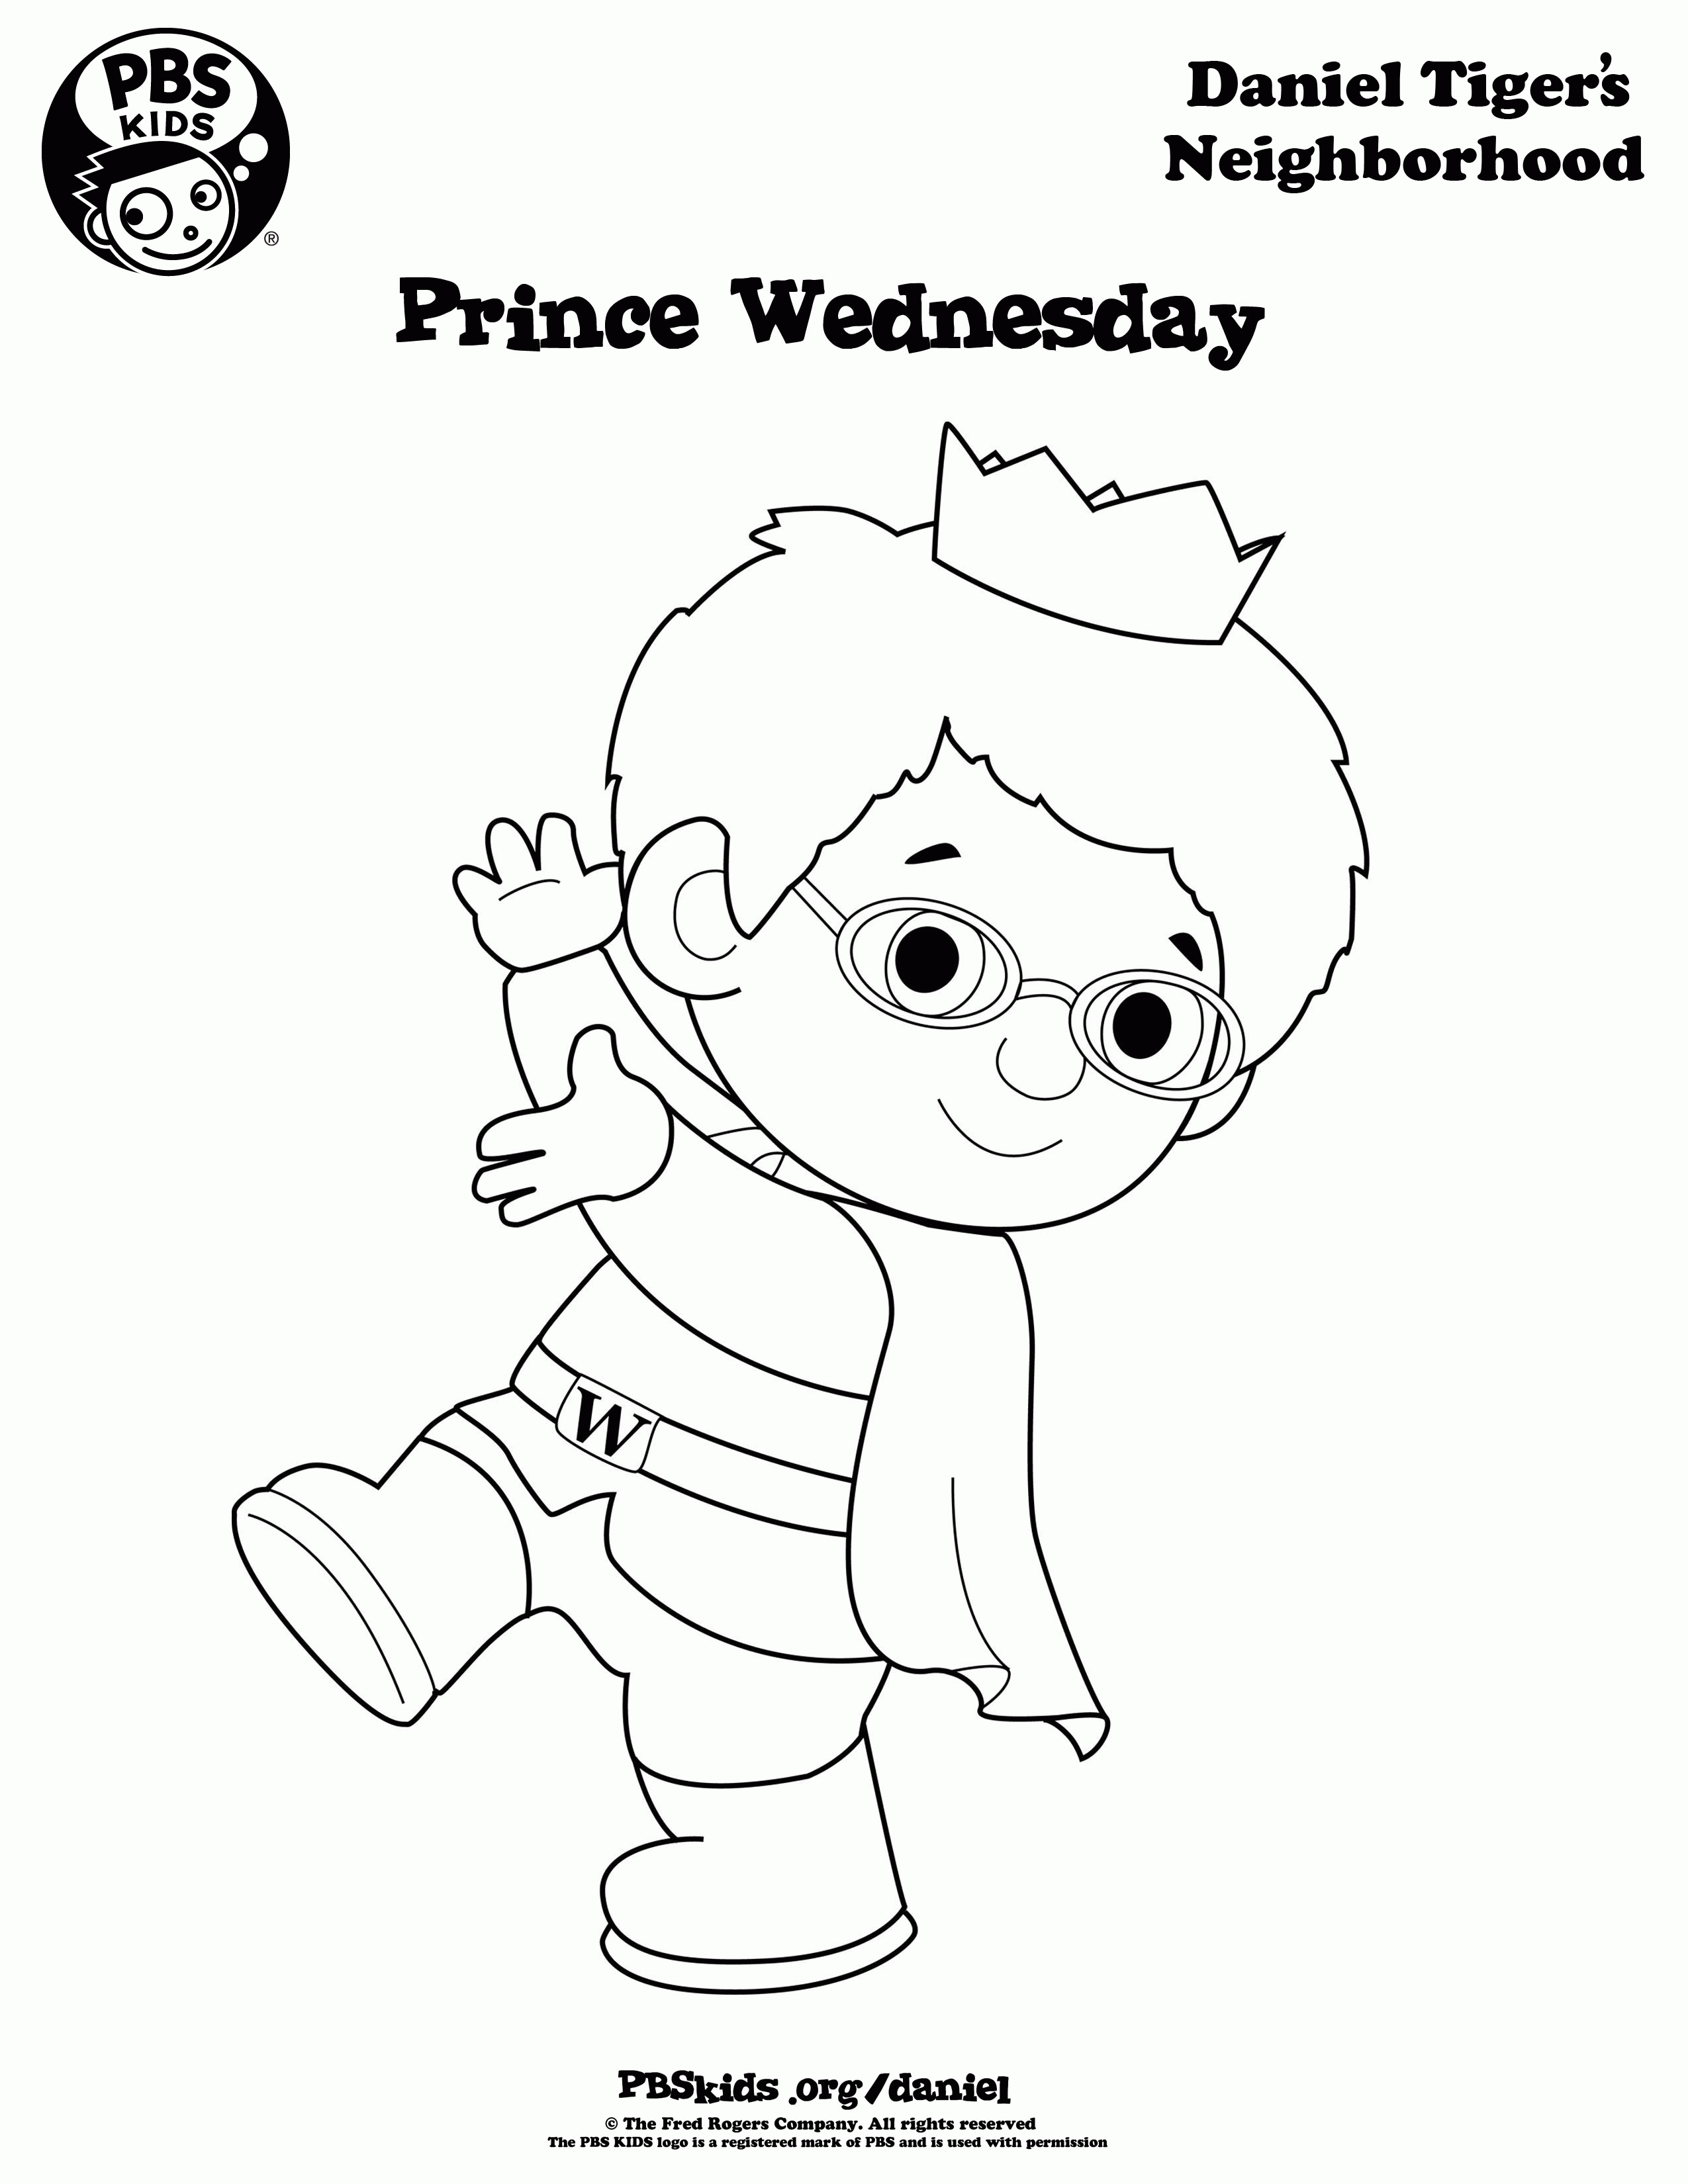 Prince Wednesday - Daniel Tiger's Neighborhood Coloring Page